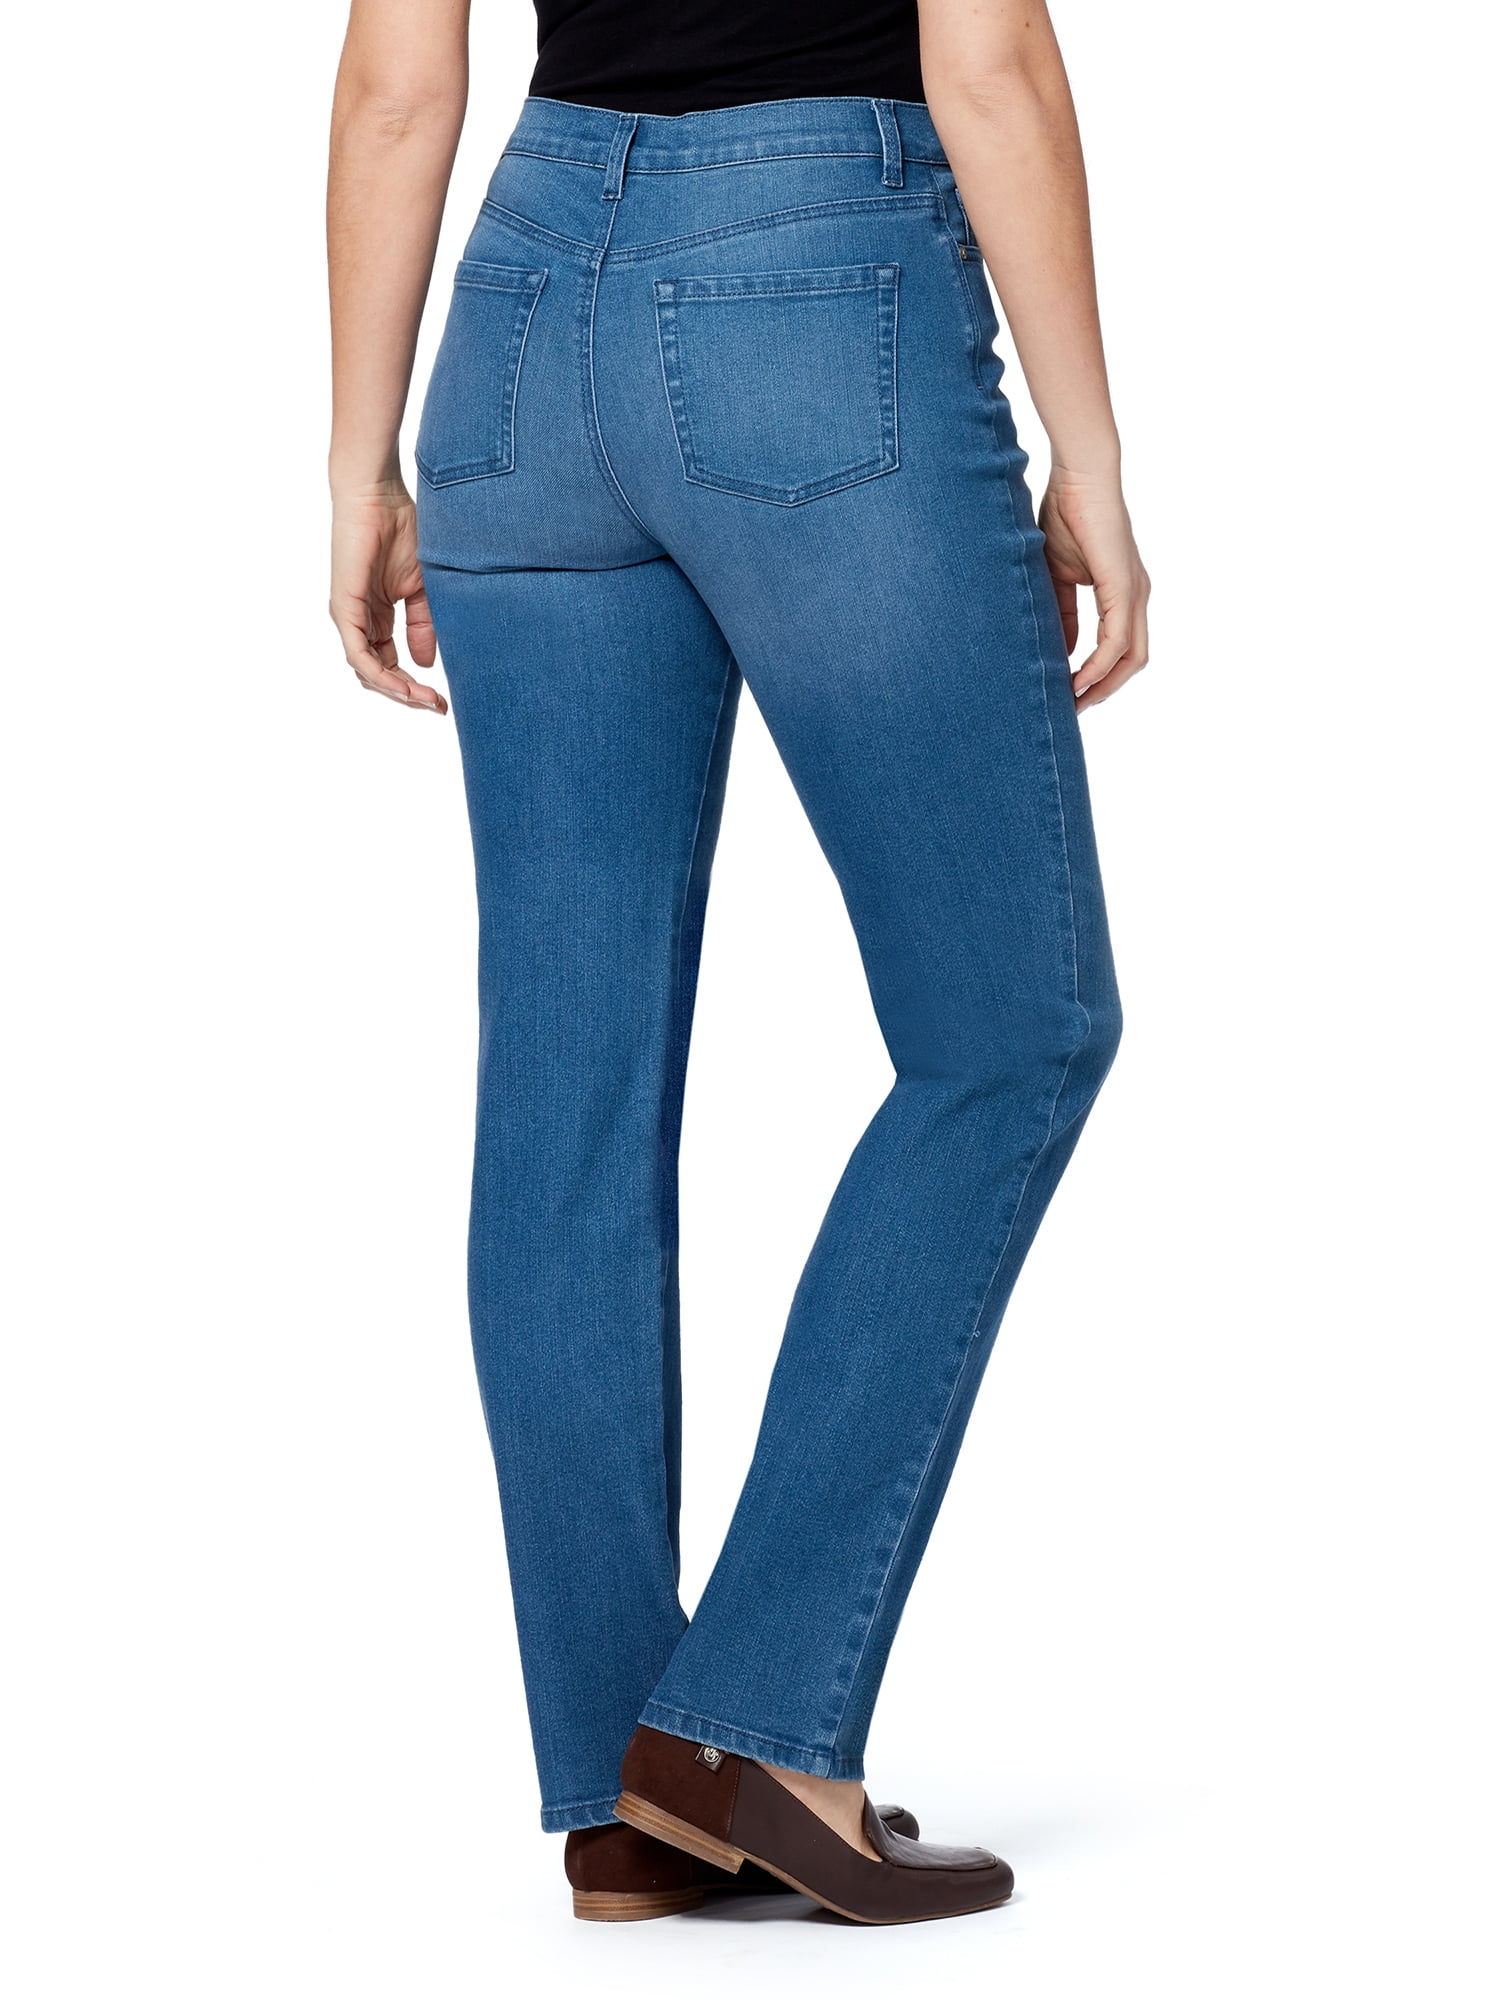 gloria vanderbilt amanda jeans petite size 2